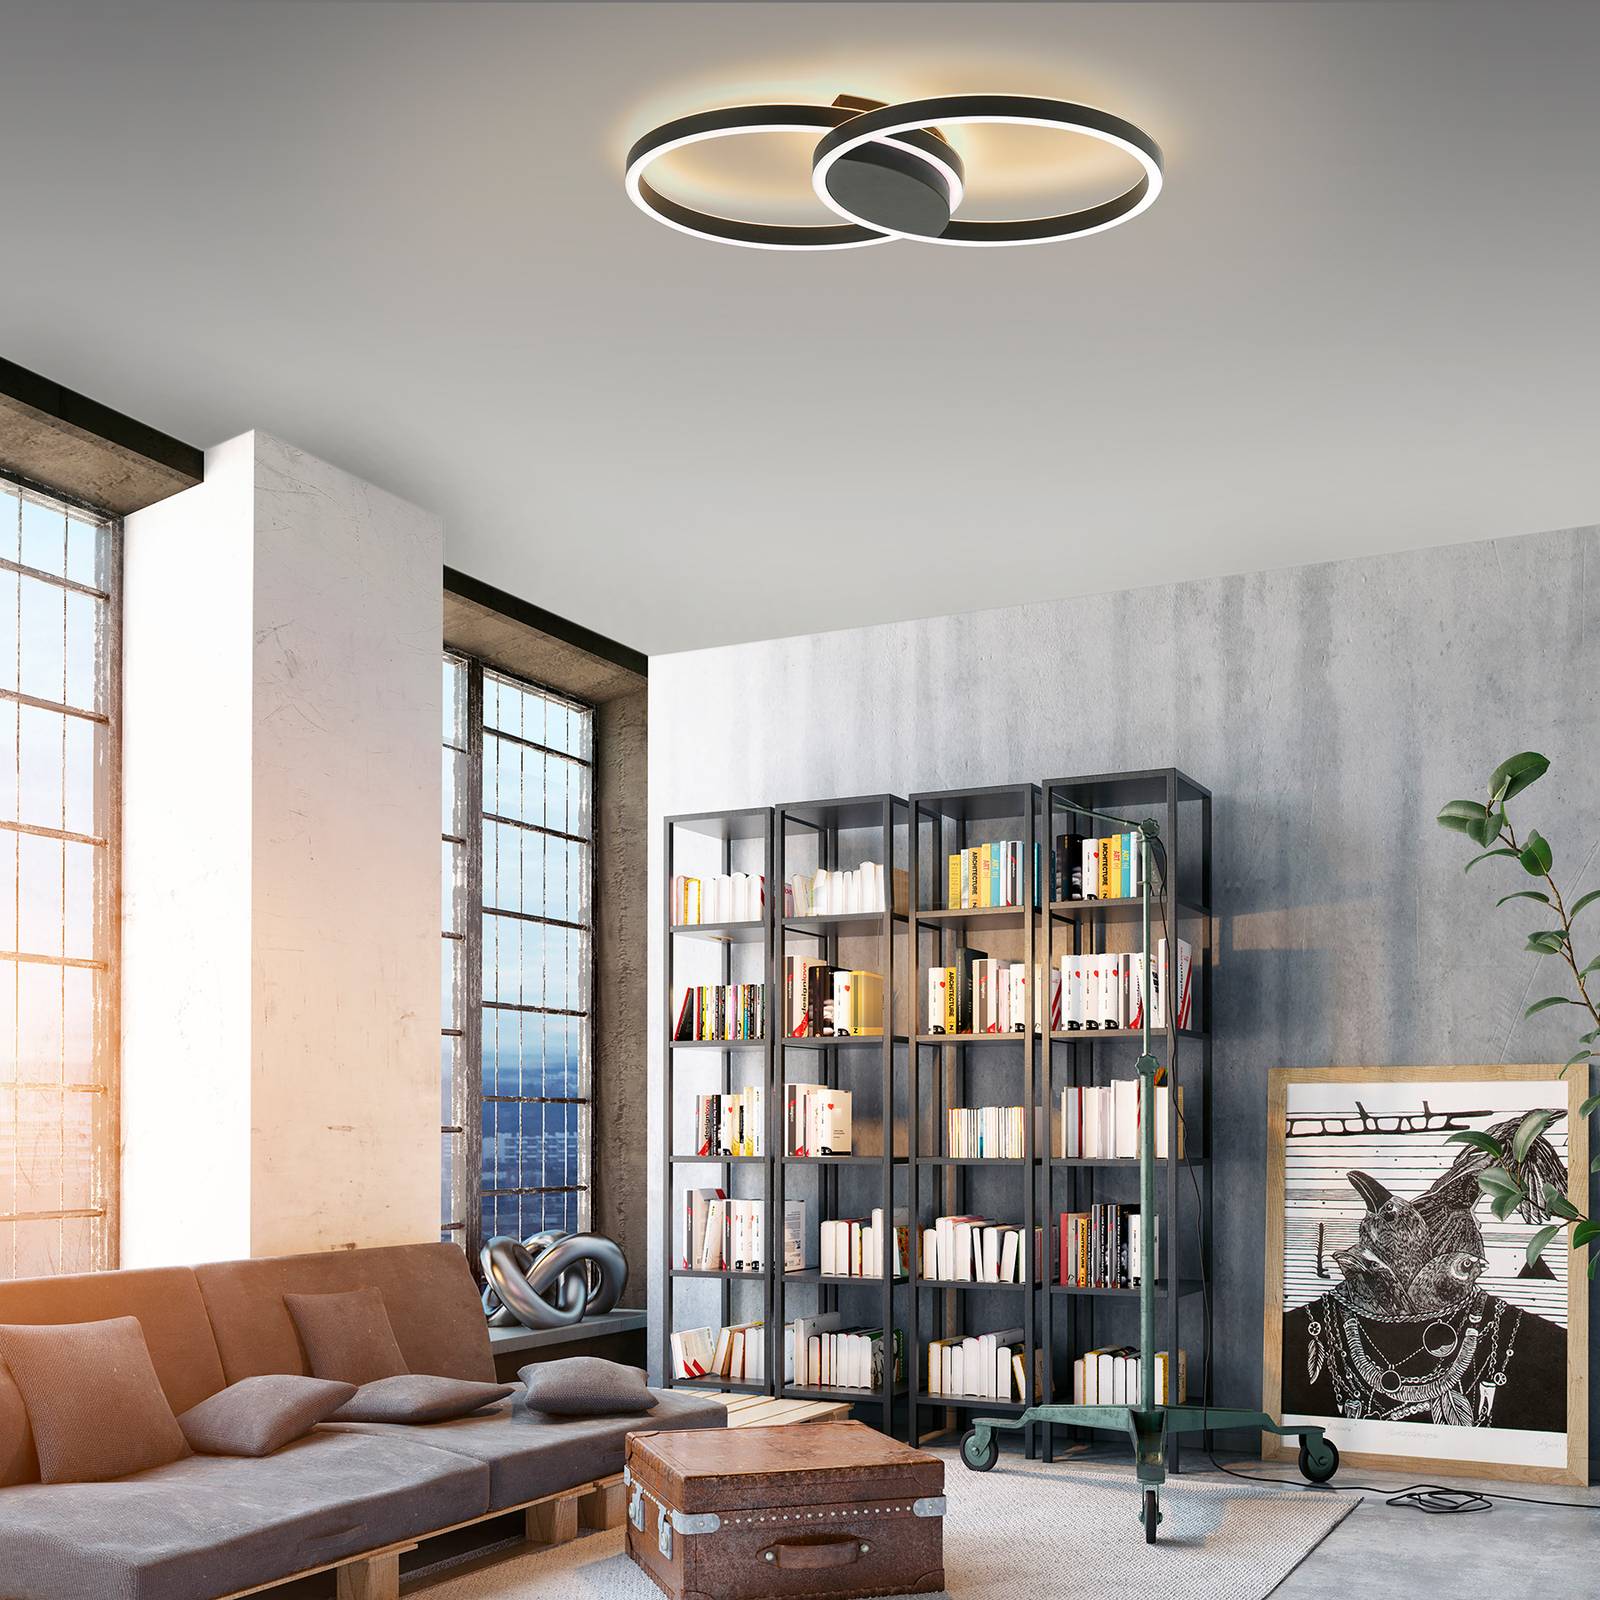 Q-Smart-Home Paul Neuhaus Q-MARKO LED stropní světlo, 2x kulaté